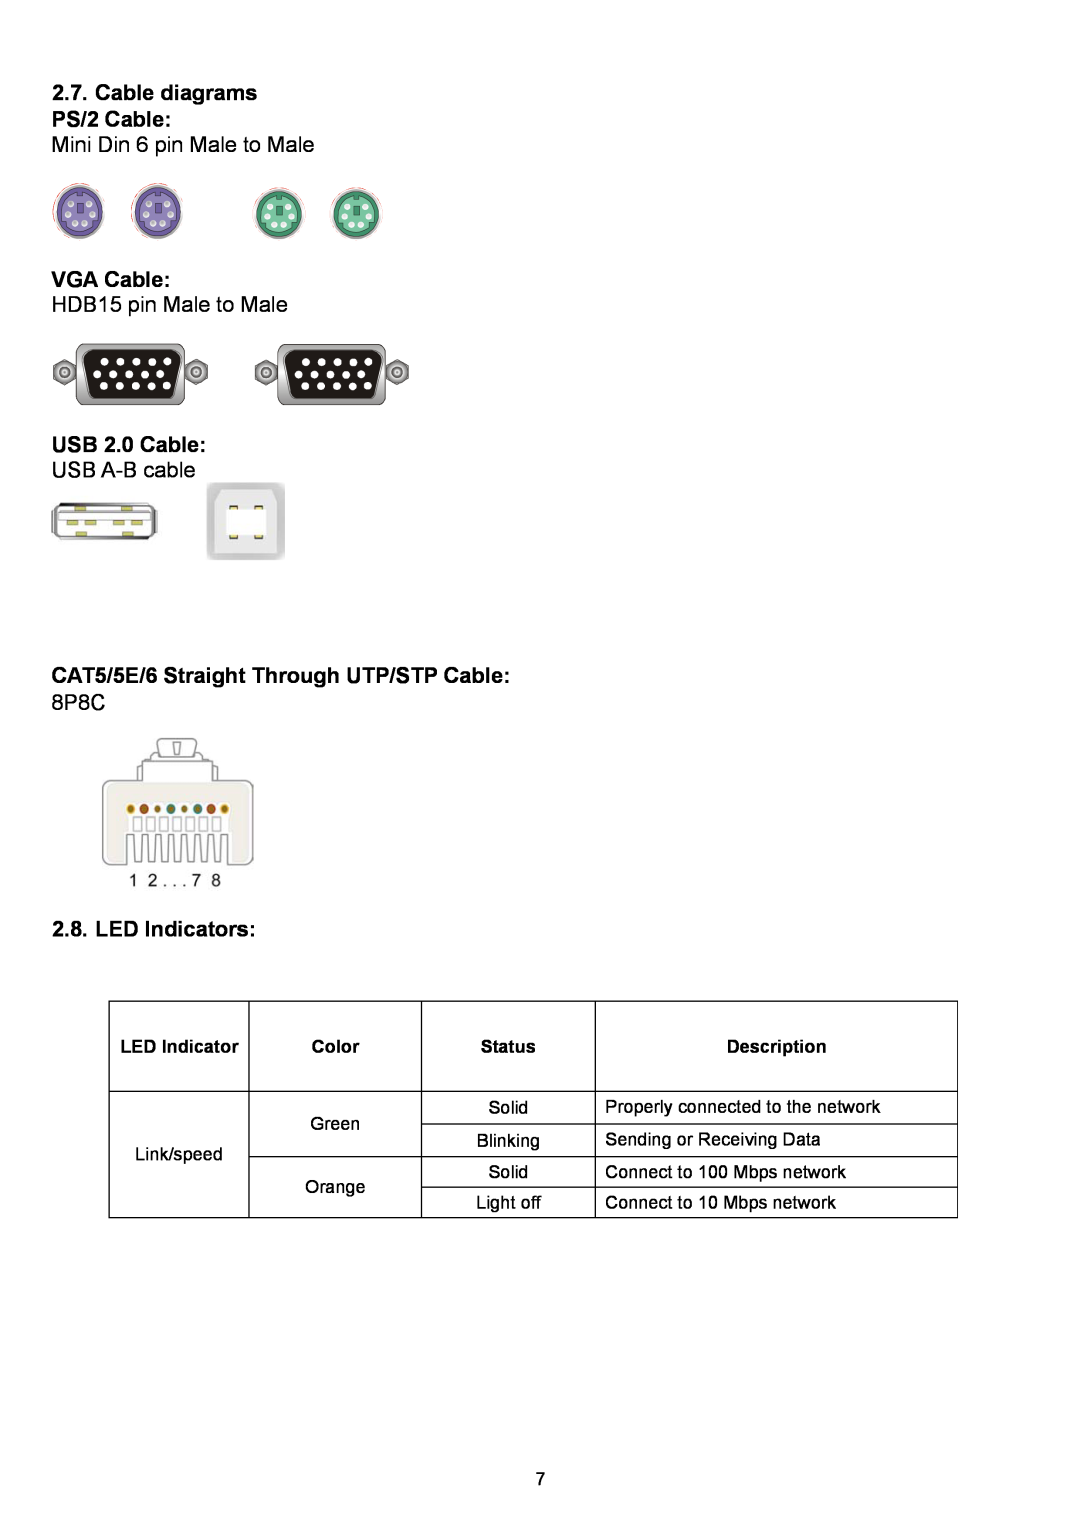 D-Link DKVM-IP1 manual Cable diagrams PS/2 Cable, VGA Cable, USB 2.0 Cable, LED Indicator, Color, Status, Description 